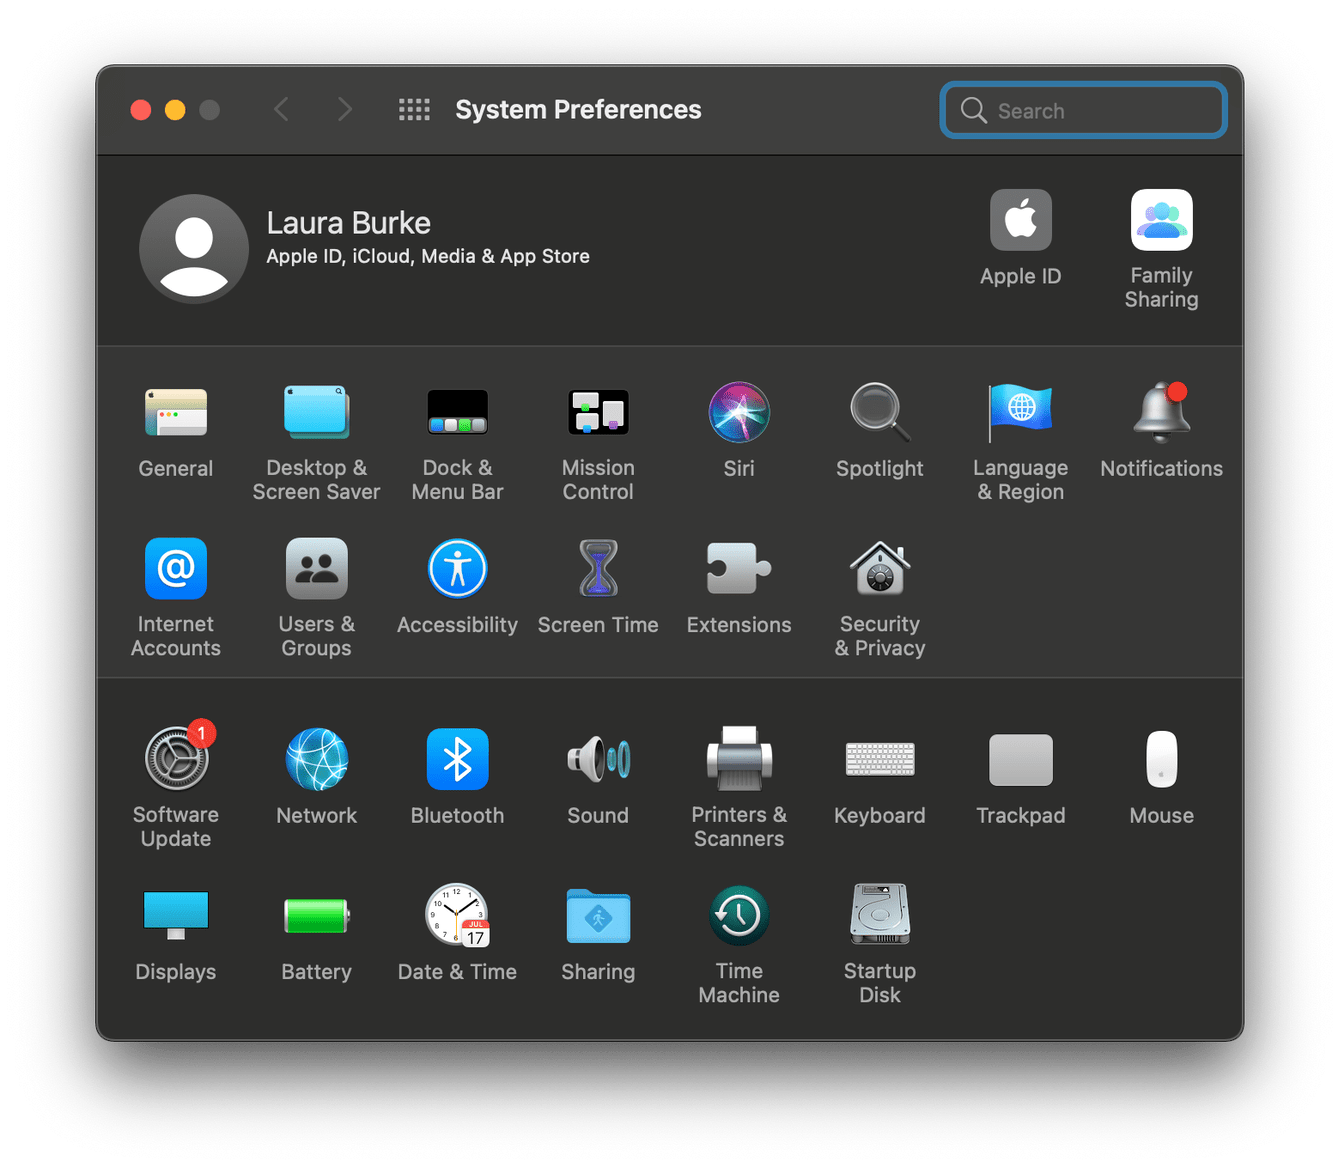 System preferences window